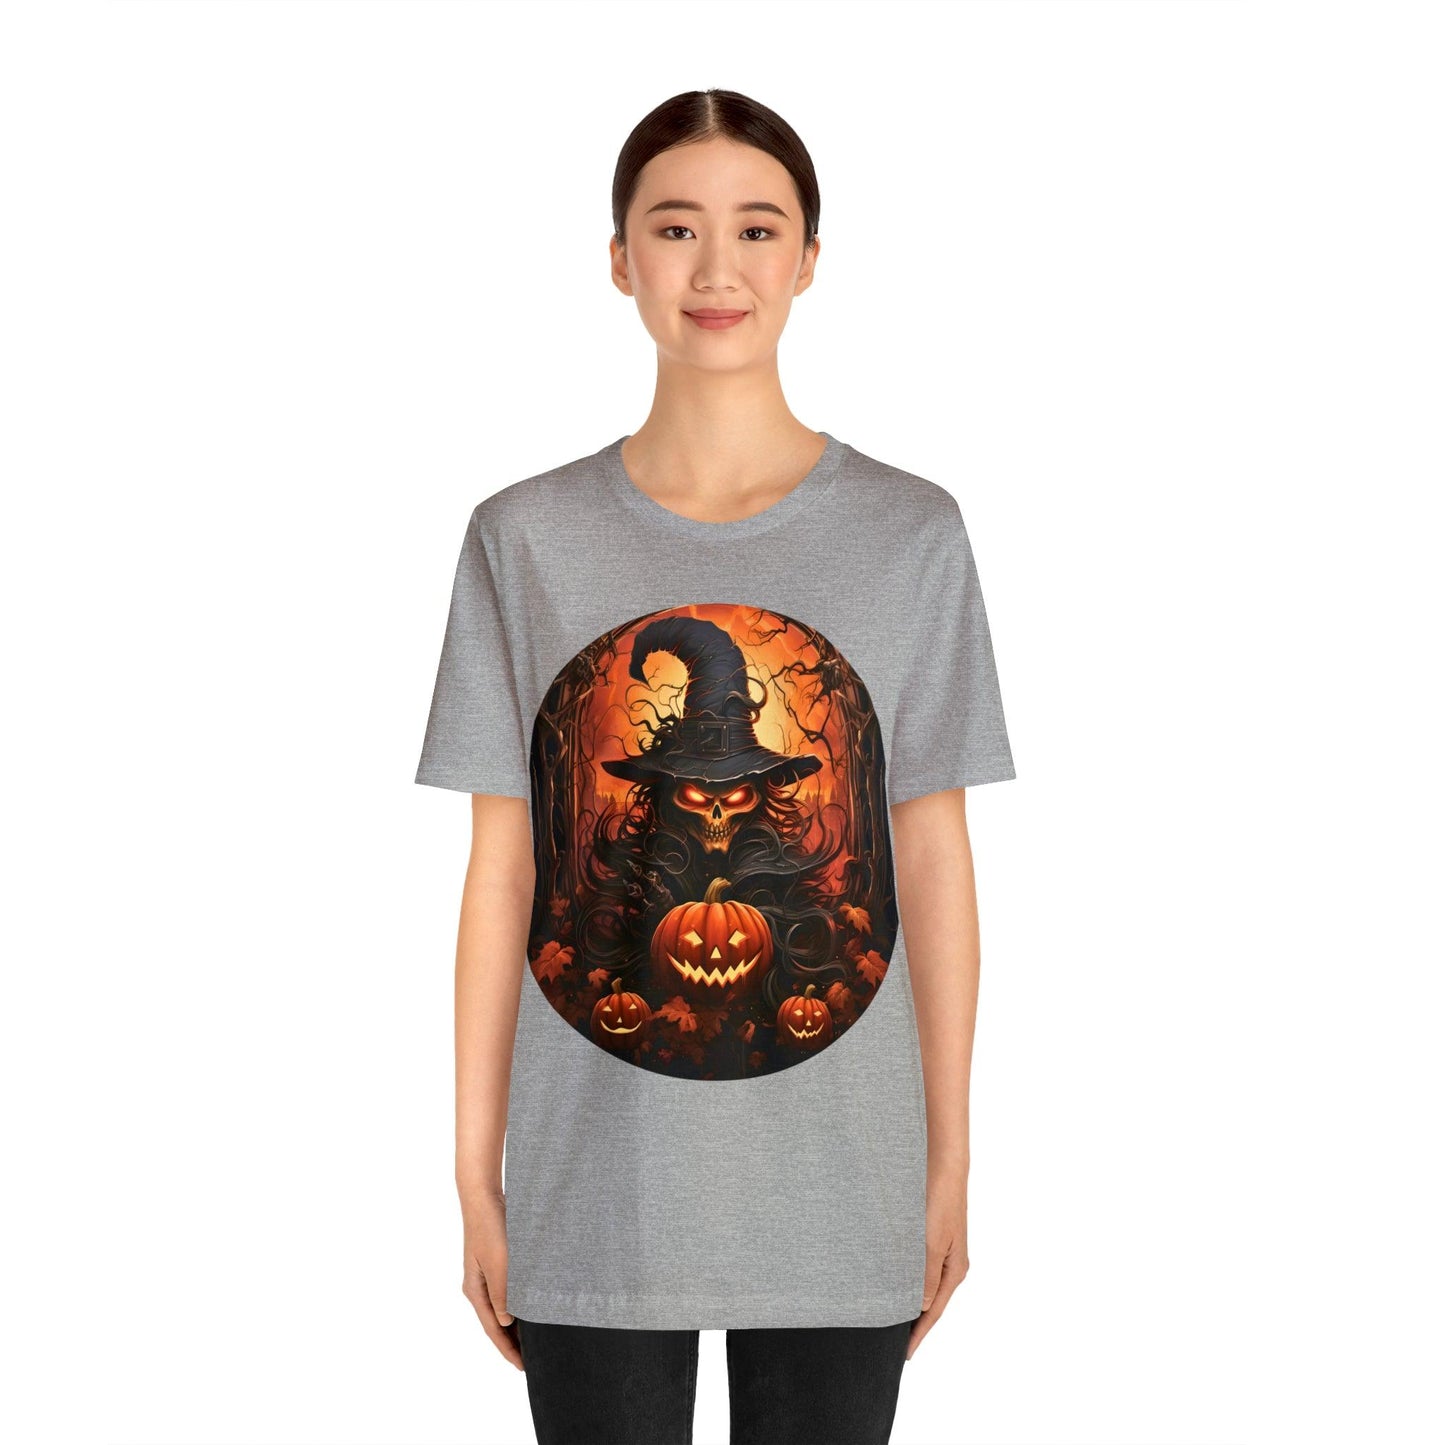 Spooky Jack O Lantern Pumpkin Face Shirt Pumpkin Face Halloween Costume Scary Faces, Pumpkin Silhouette, Vintage Shirt Halloween Shirt - Giftsmojo